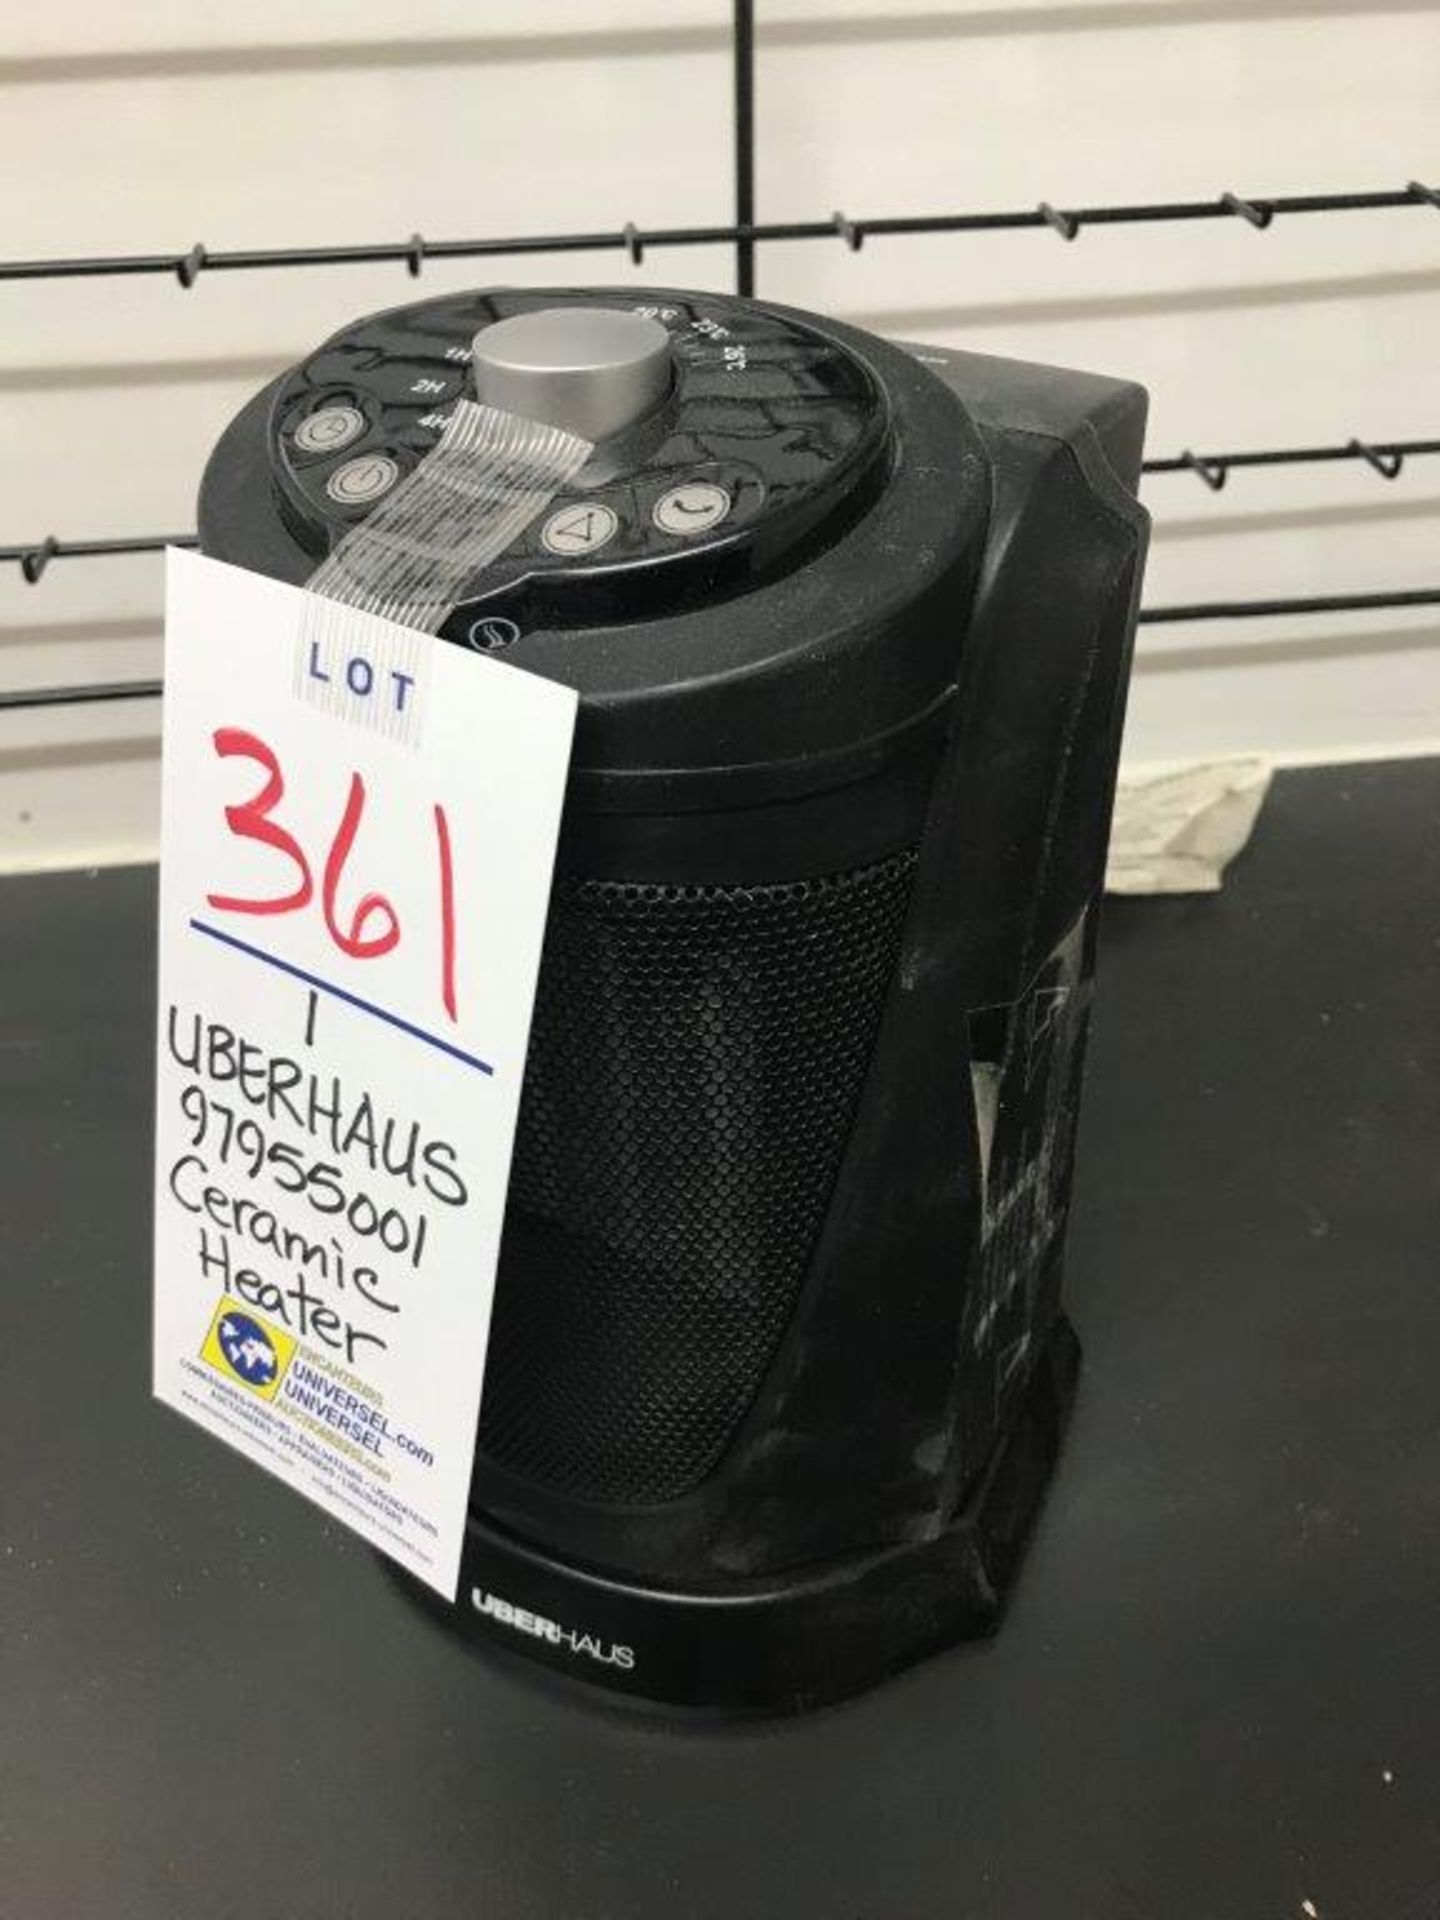 Uberhaus 97955001 Ceramic heater